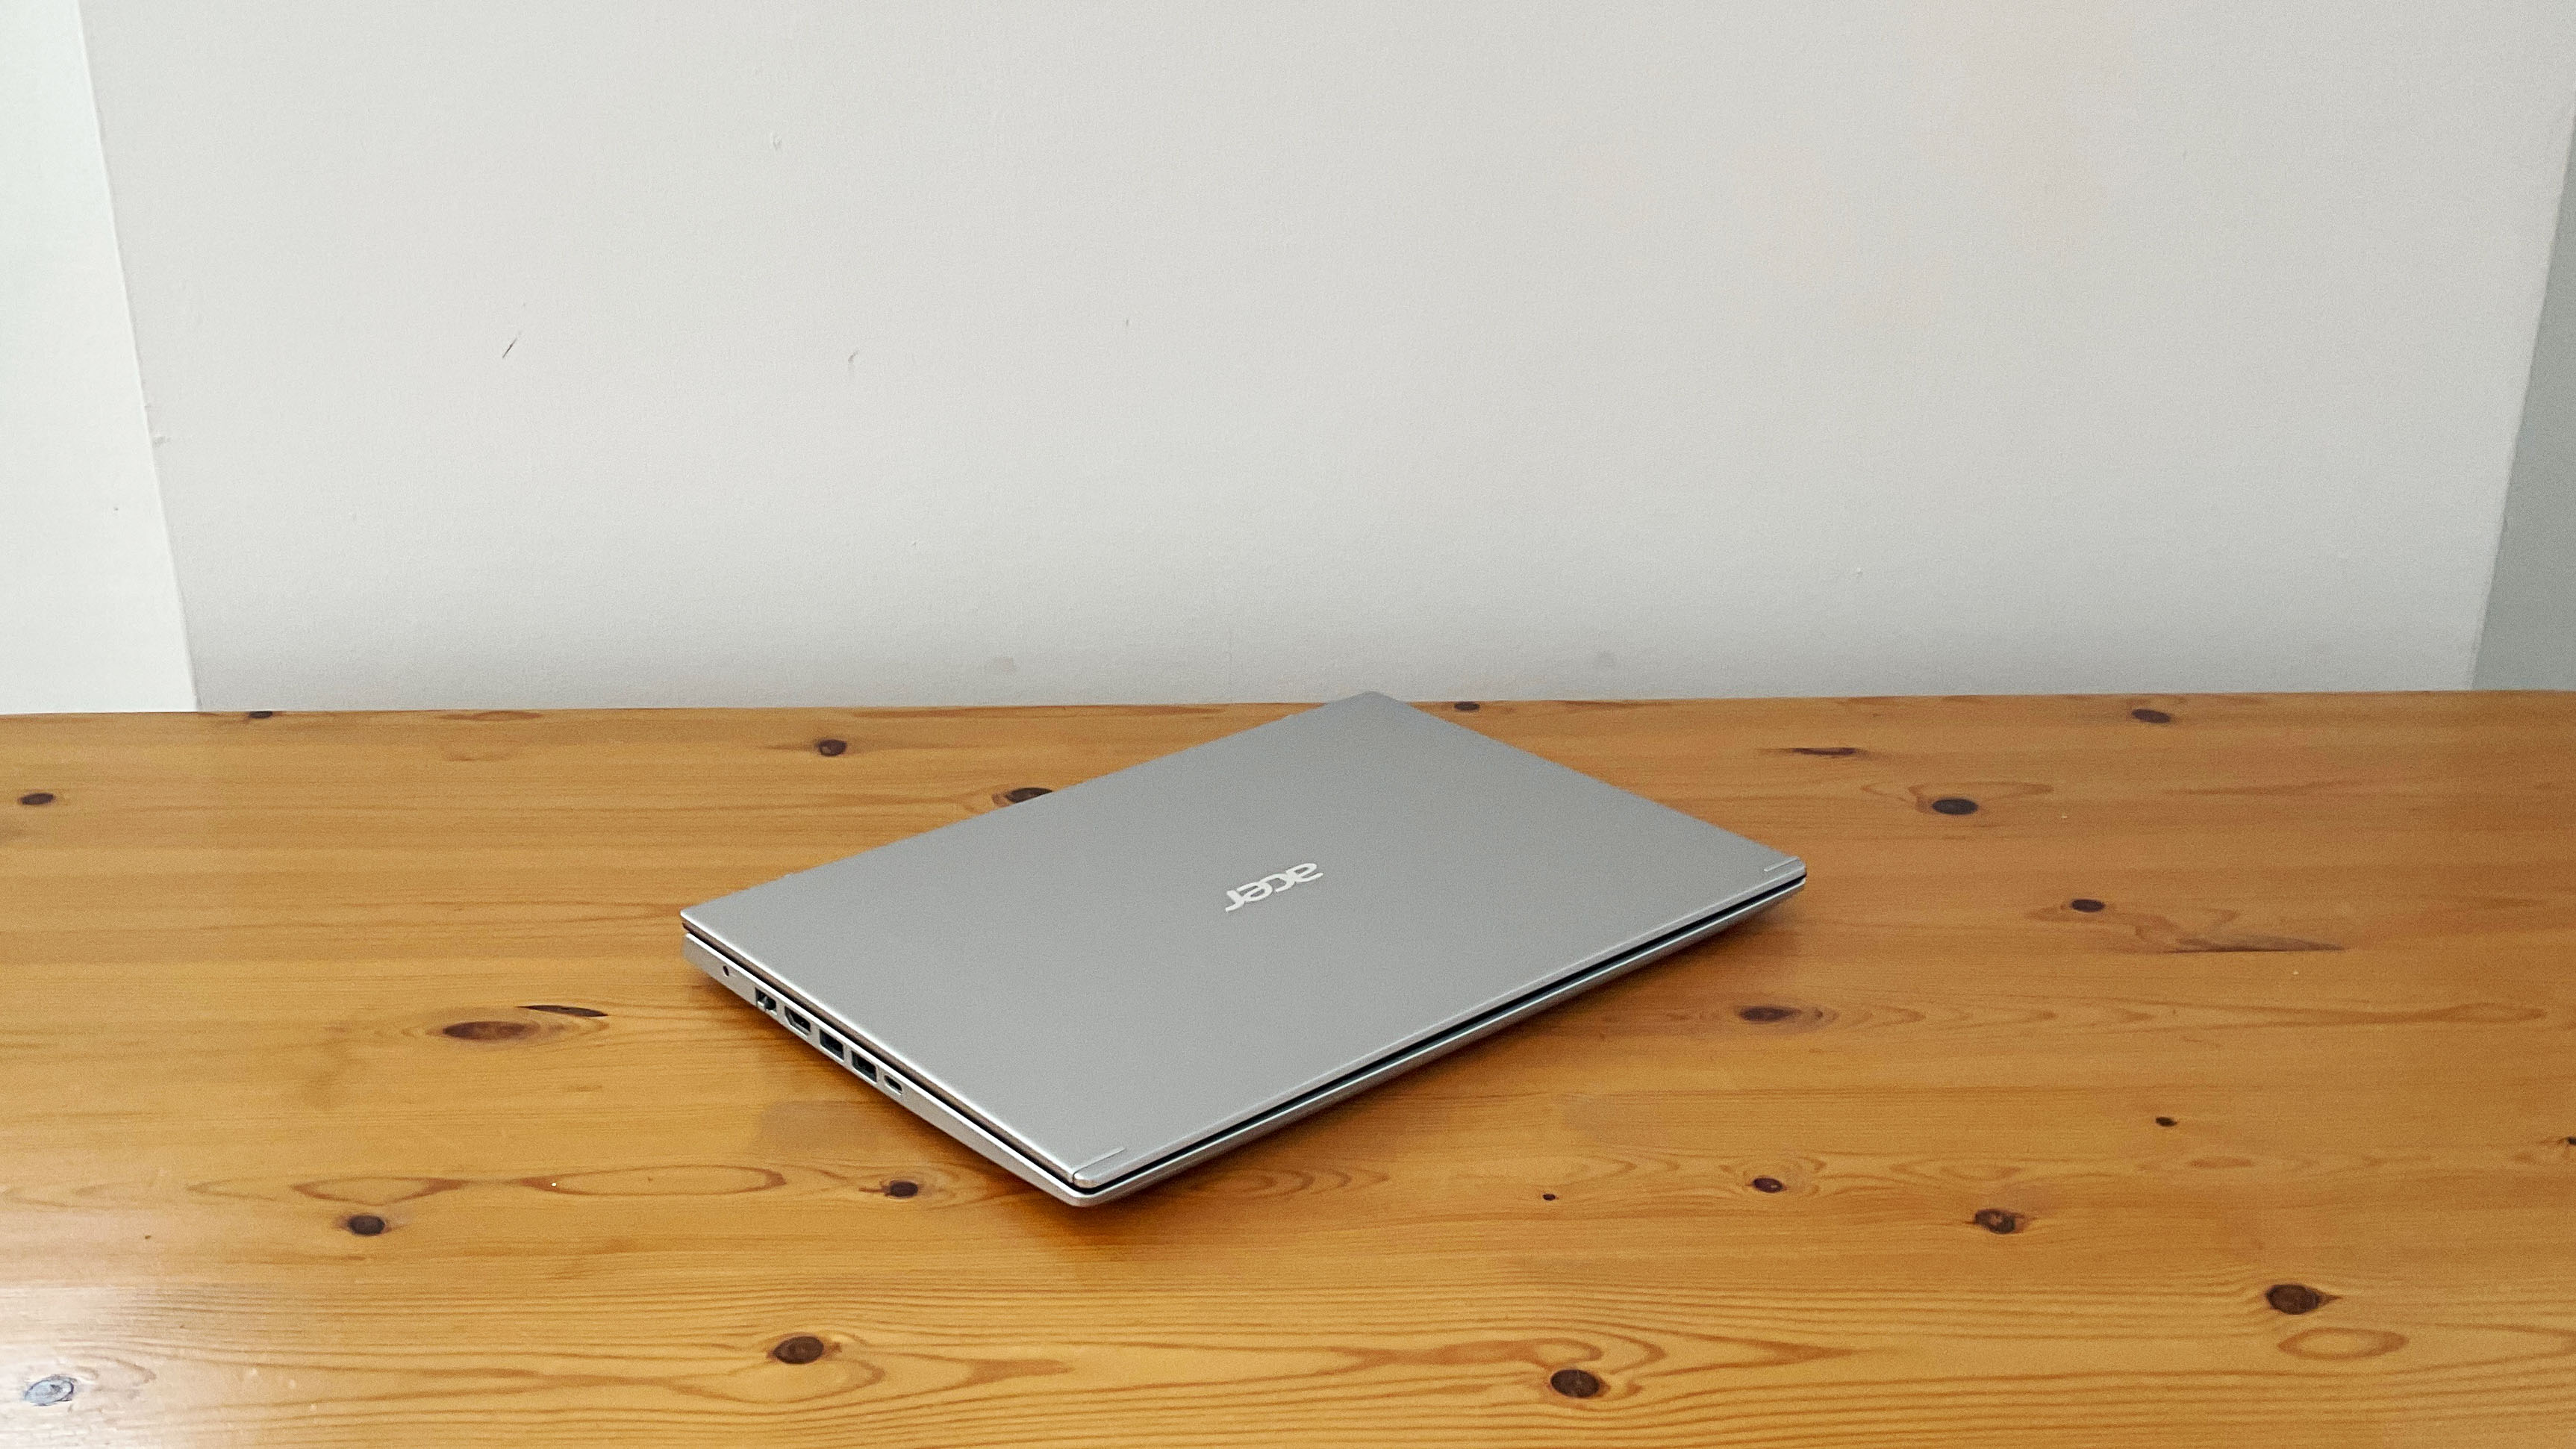 Acer Aspire 5 laptop on a desk, lid closed